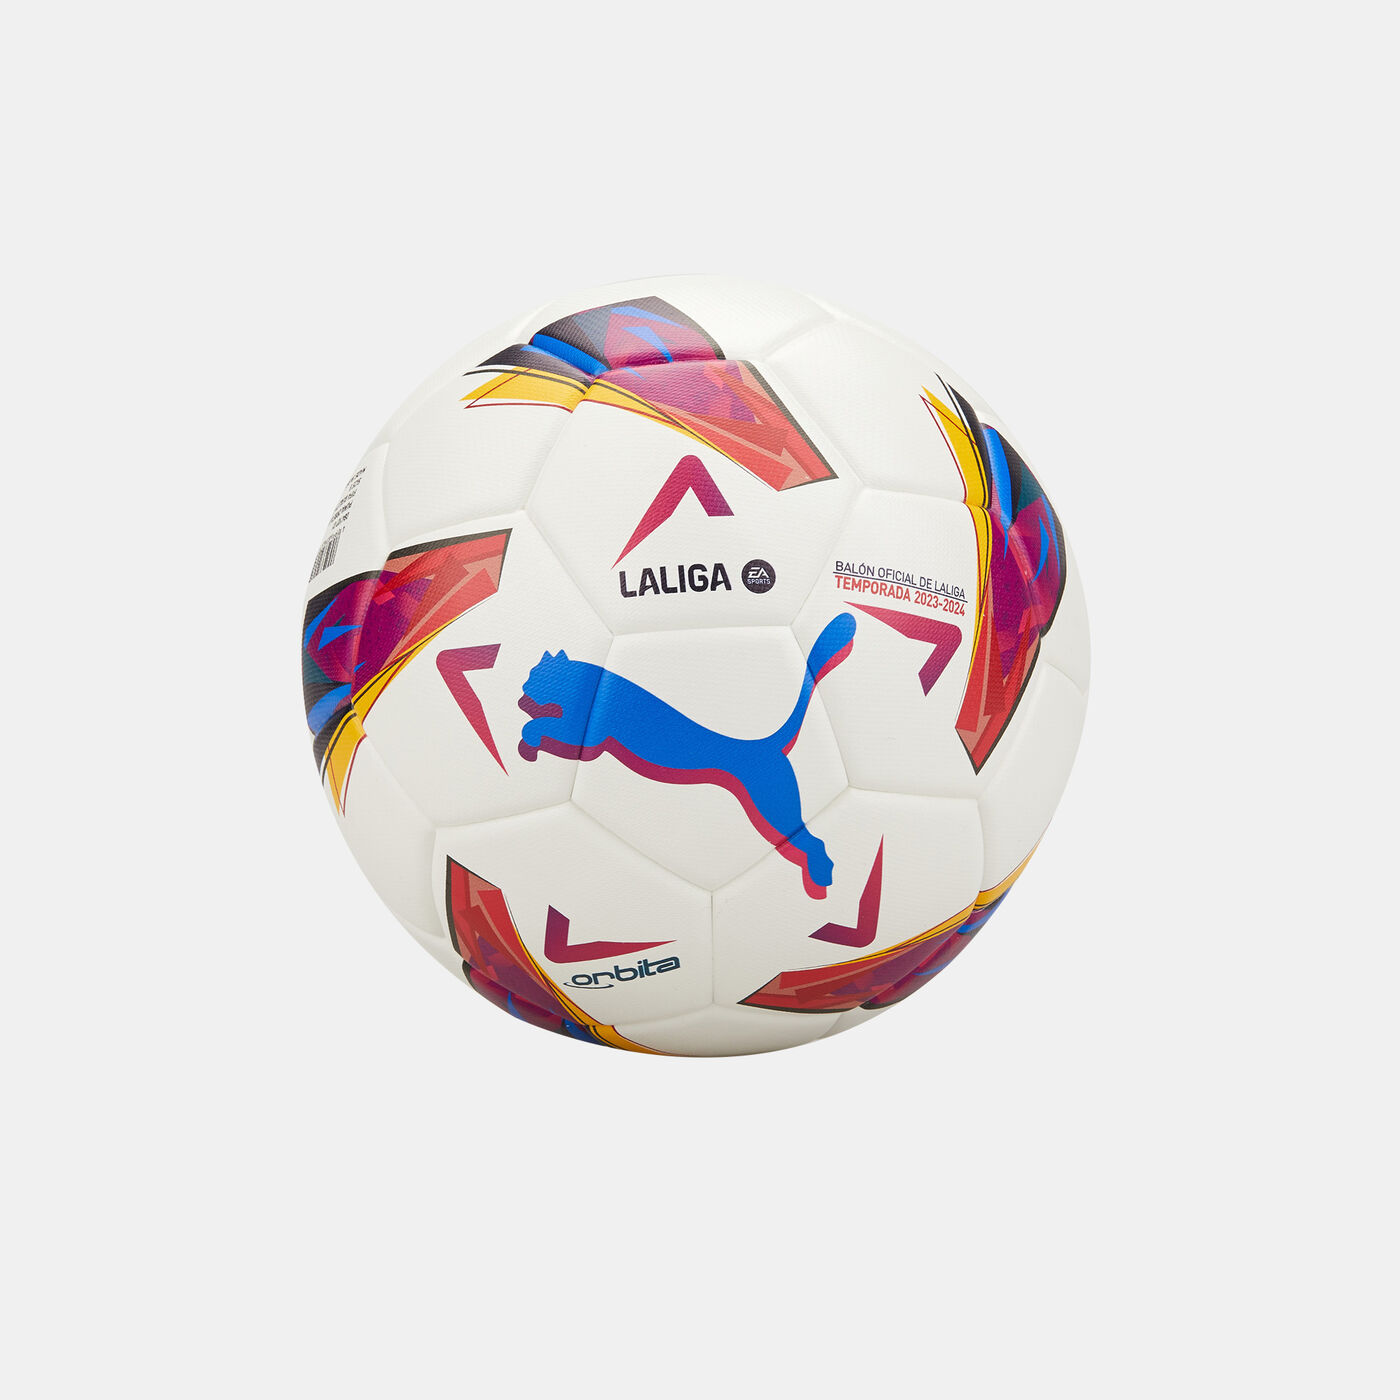 Orbita LaLiga 1 FIFA Quality Football